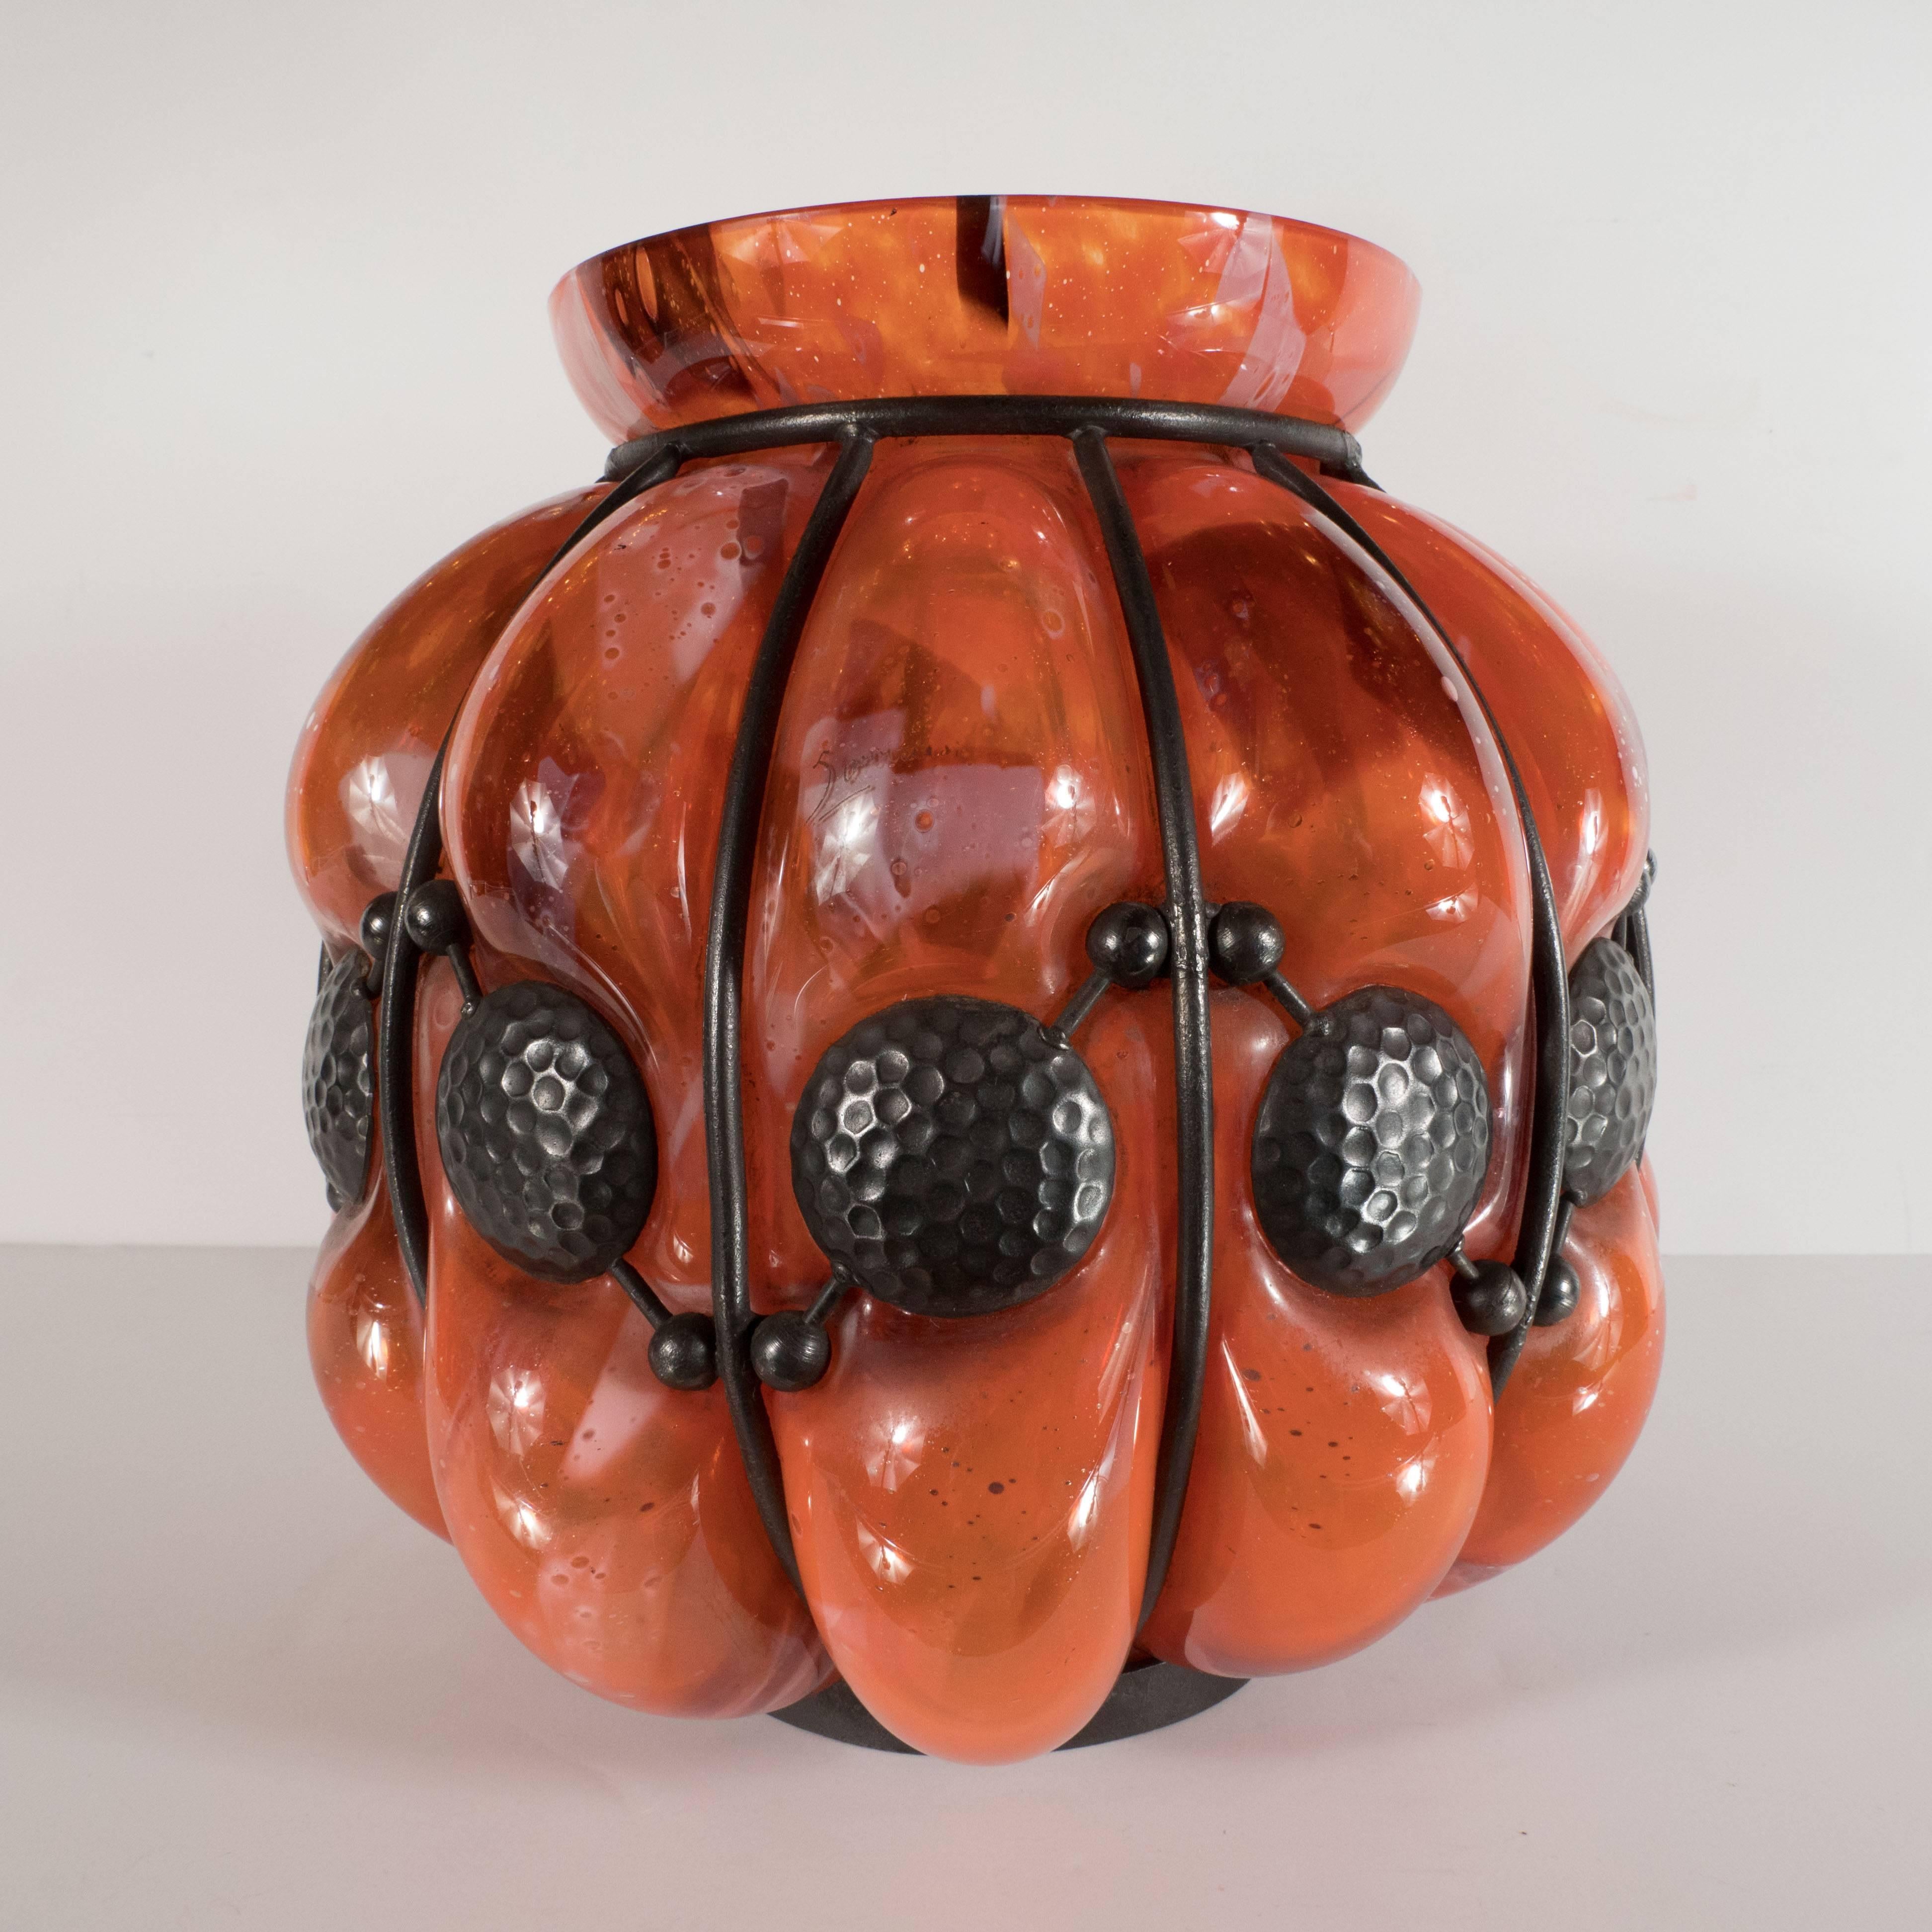 French Art Deco Mottled Vermillion Glass Vase W/ Wrought Iron by Majorelle & Daum